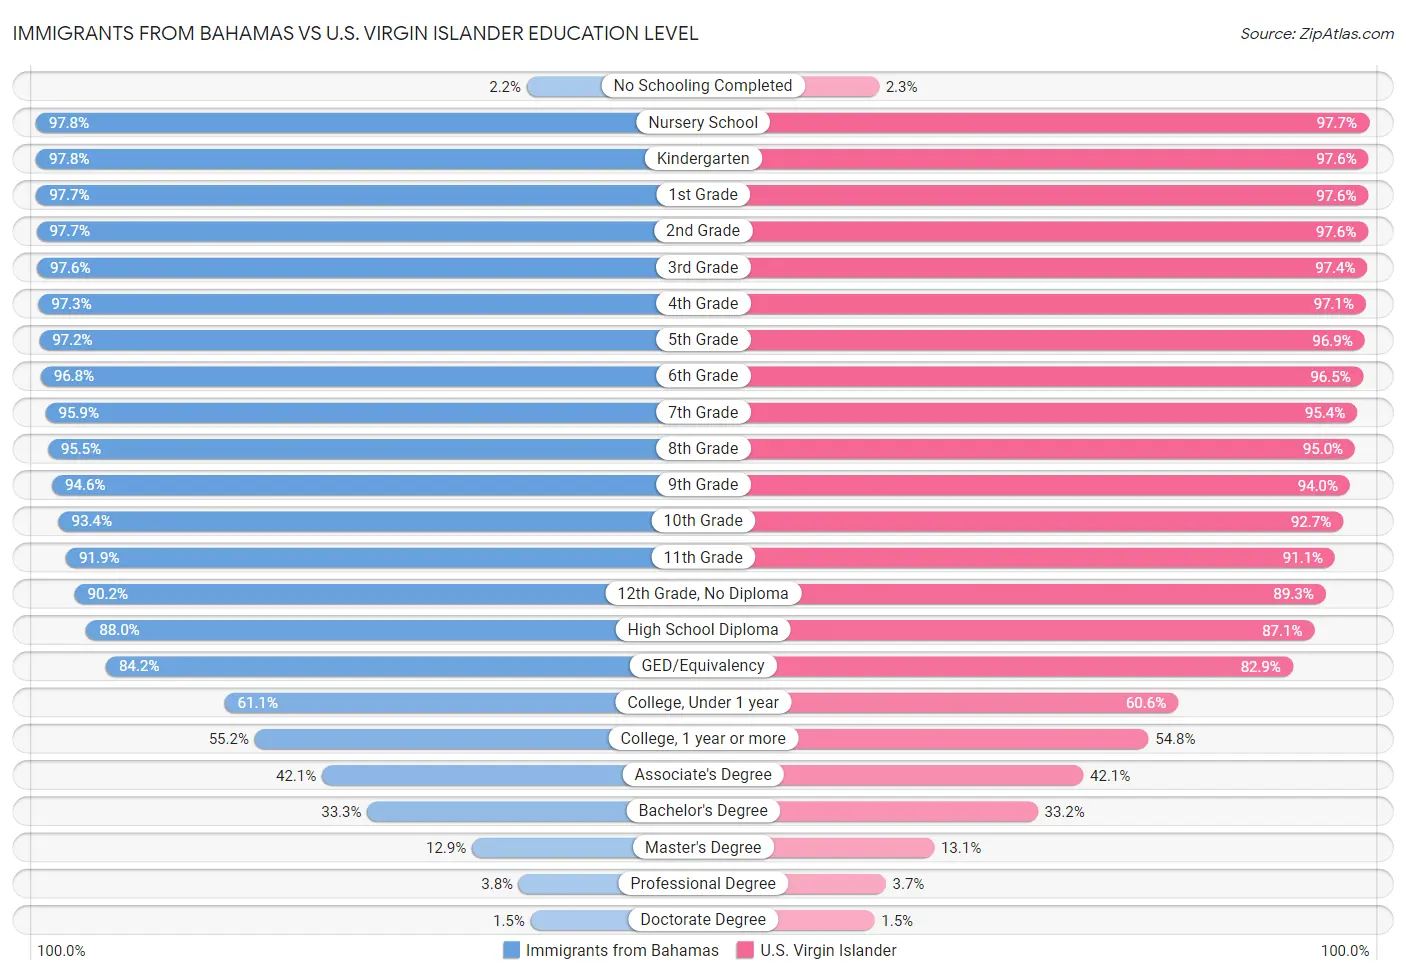 Immigrants from Bahamas vs U.S. Virgin Islander Education Level